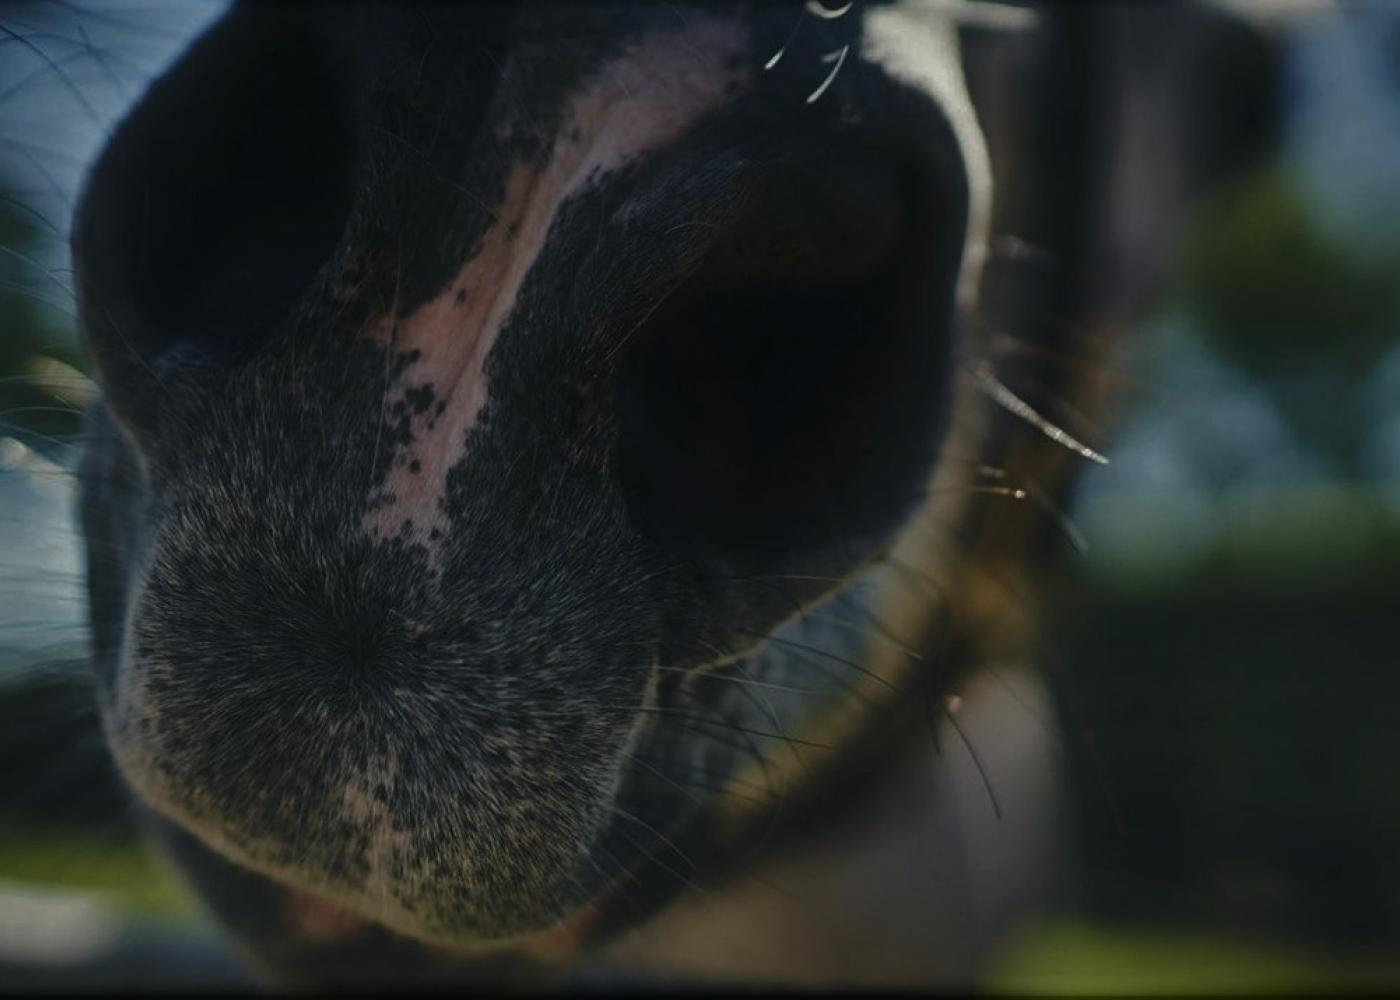 Closeup of horse muzzle